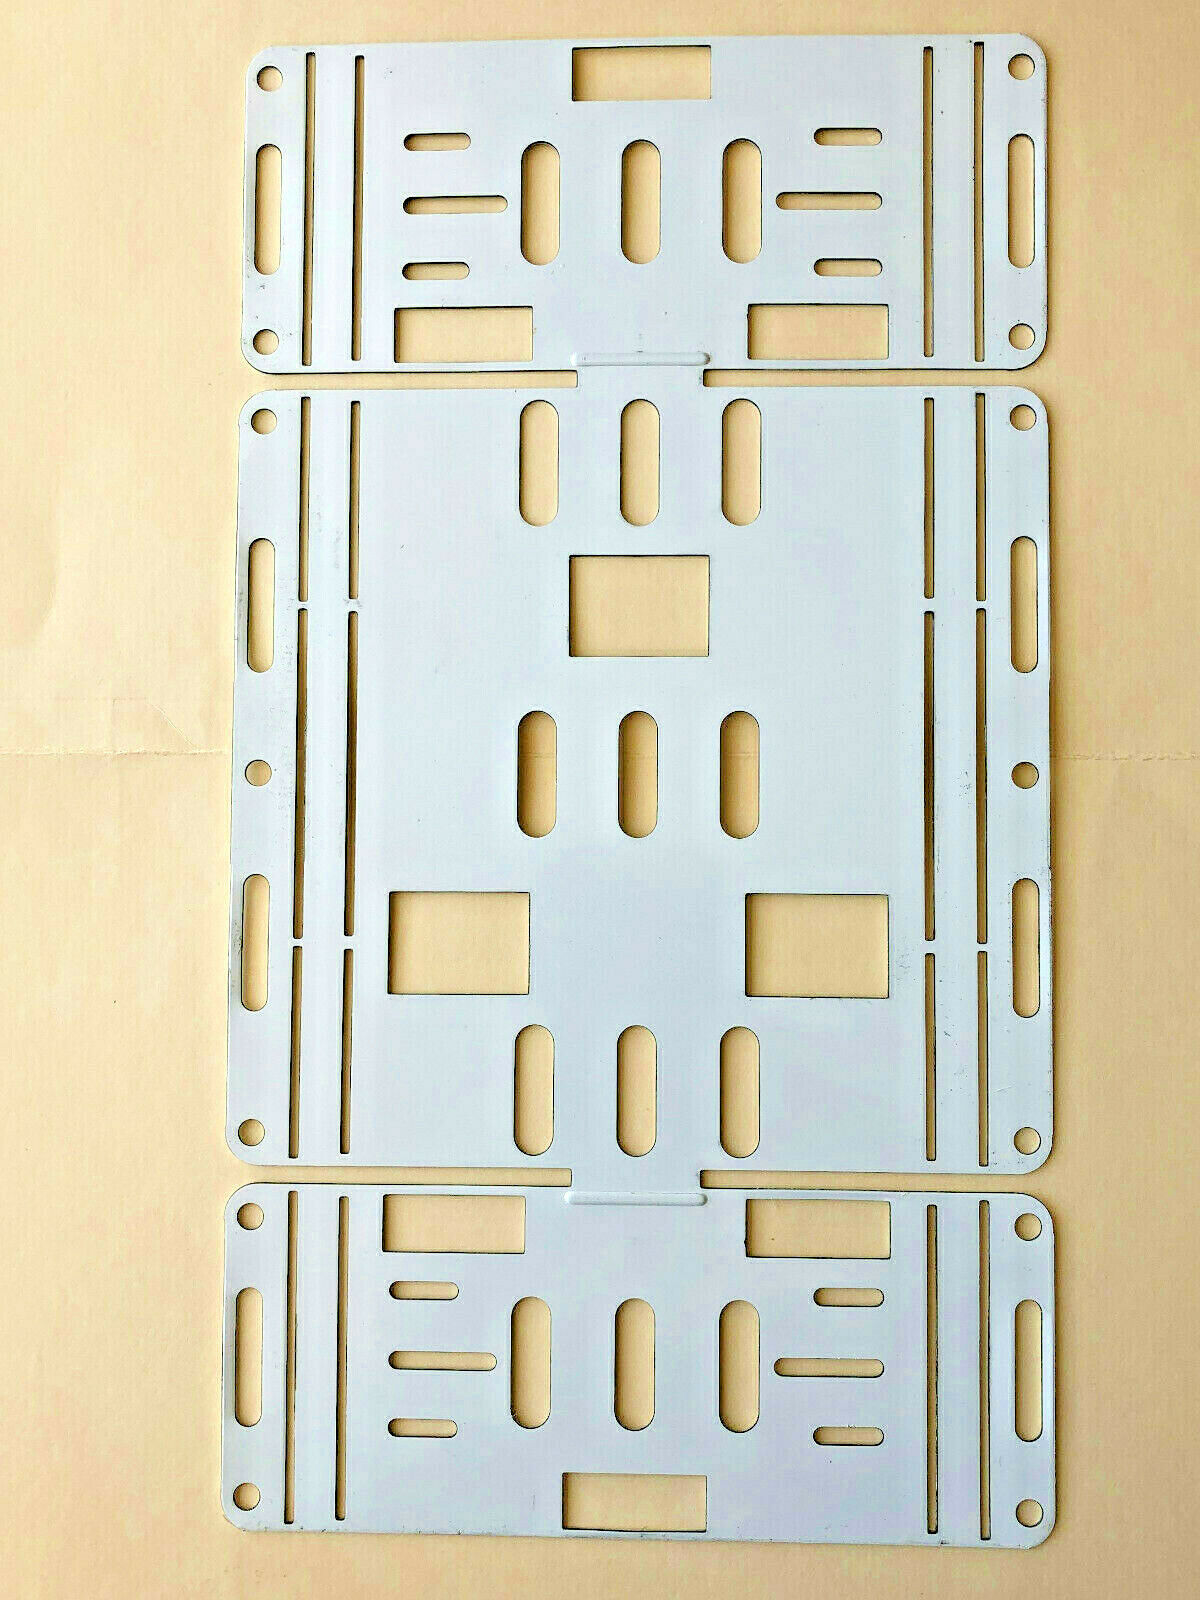 Retrofit Kit Conversion Plate For 8' 2 Bulb T12 Light Strip To T8 Led Fixture